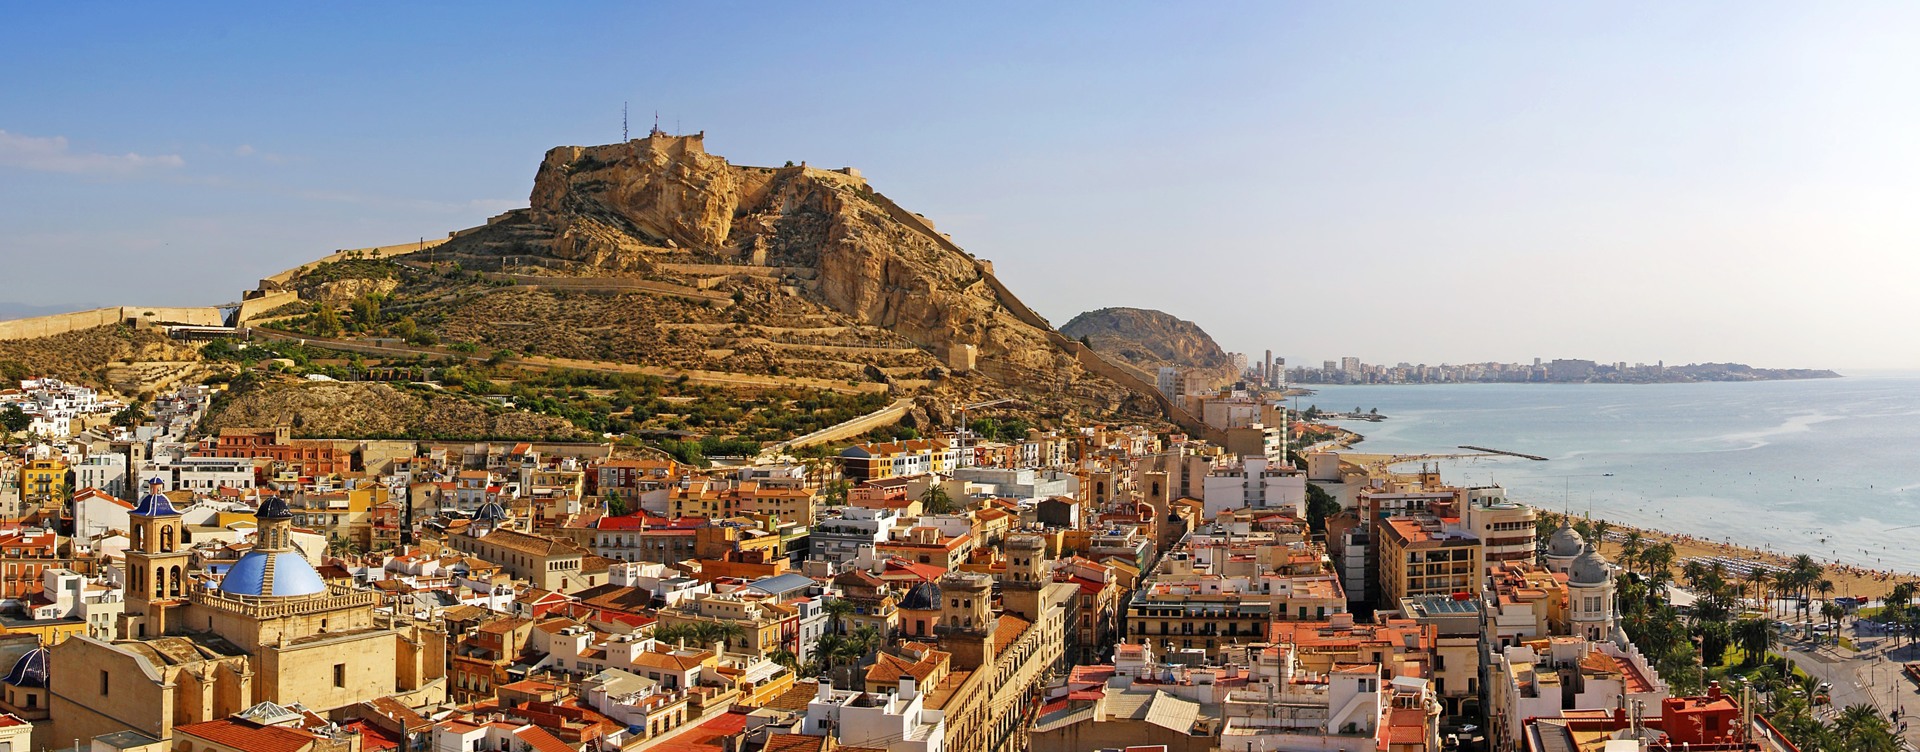 Explore the vibrant city centre of Alicante 
and visit the sights